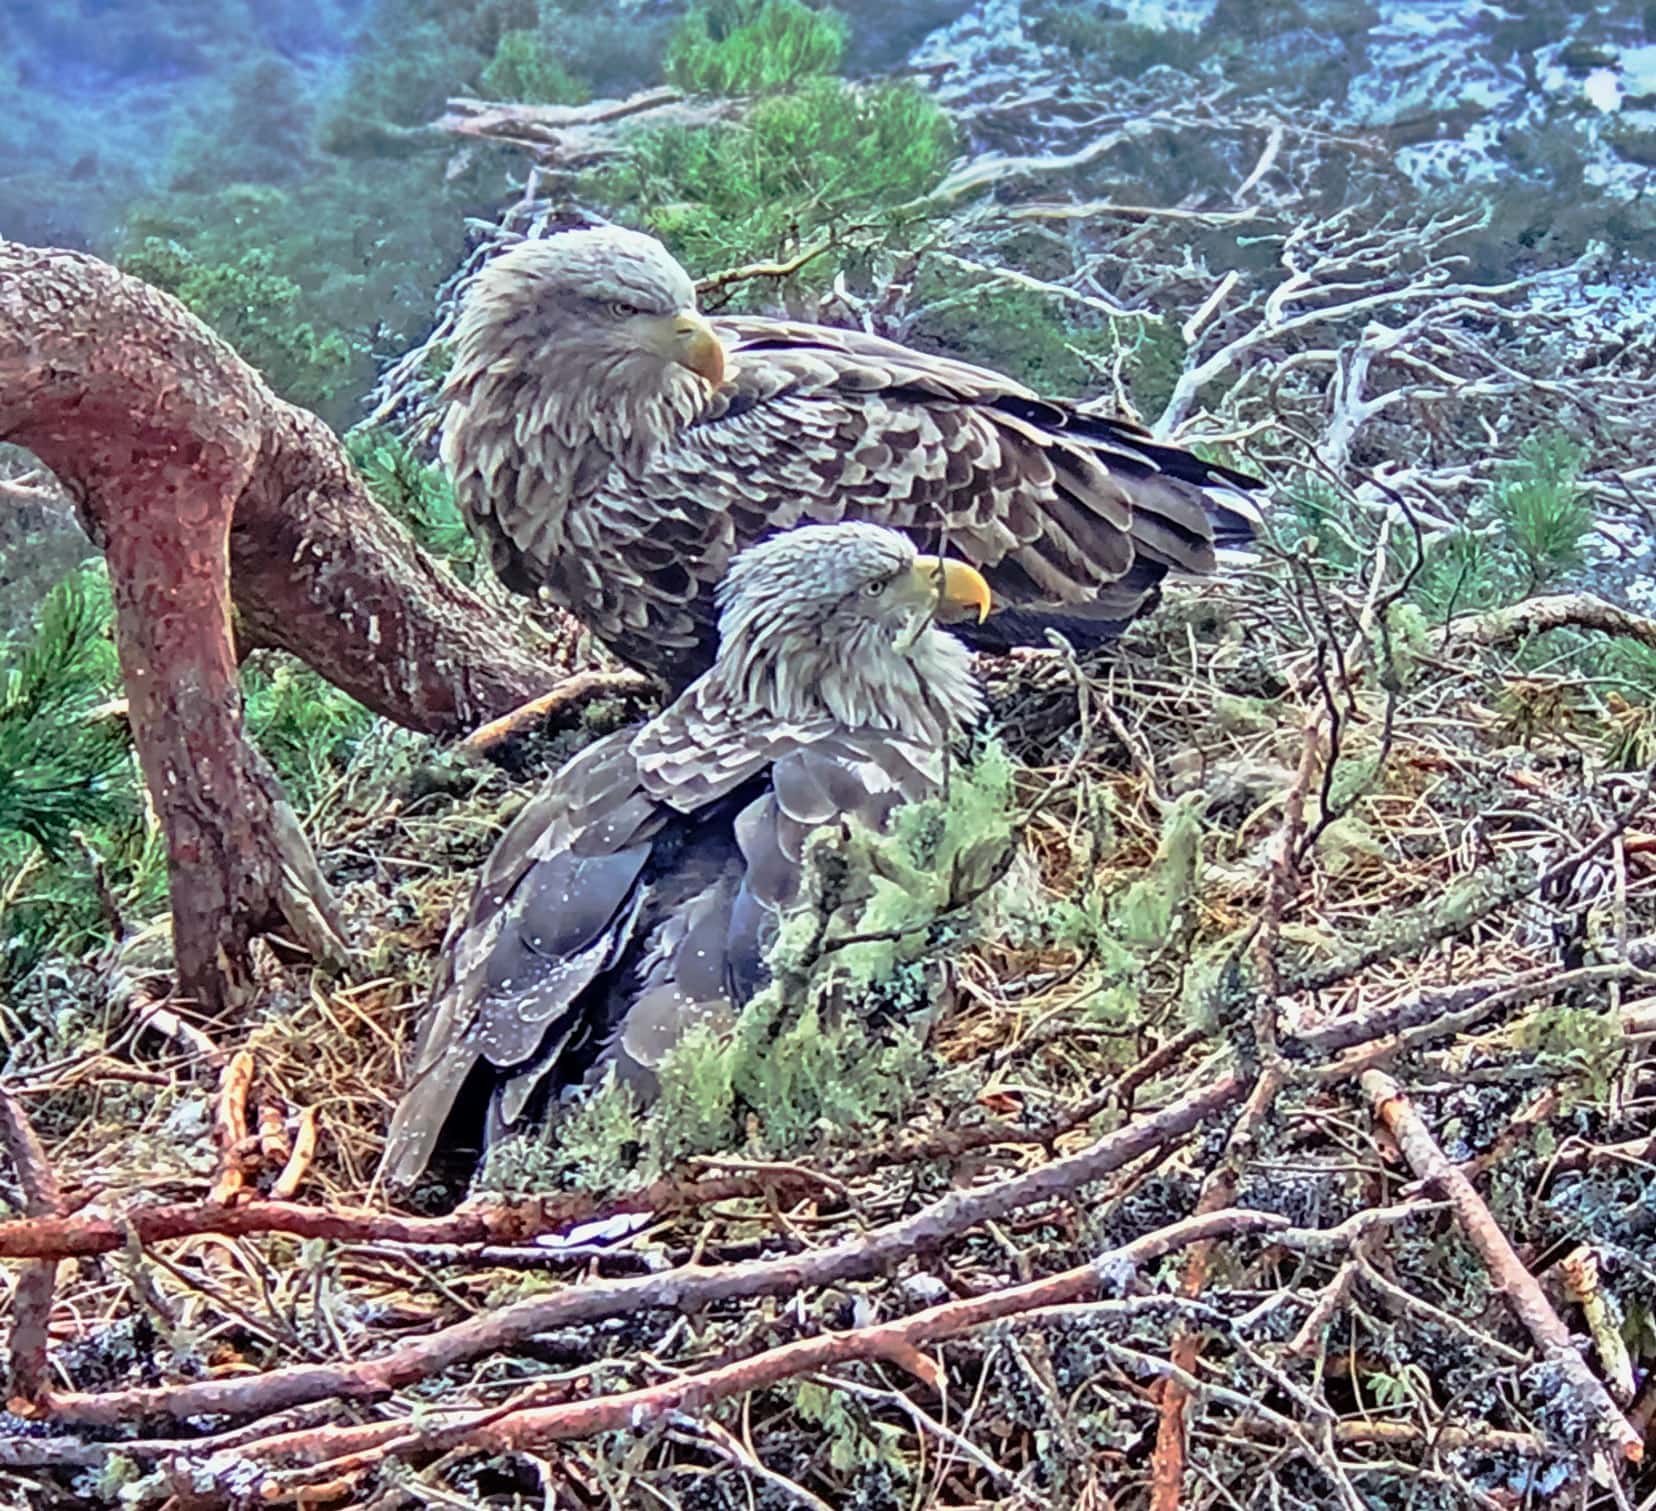 Loch garten osprey webcam showing two osprey building their nest